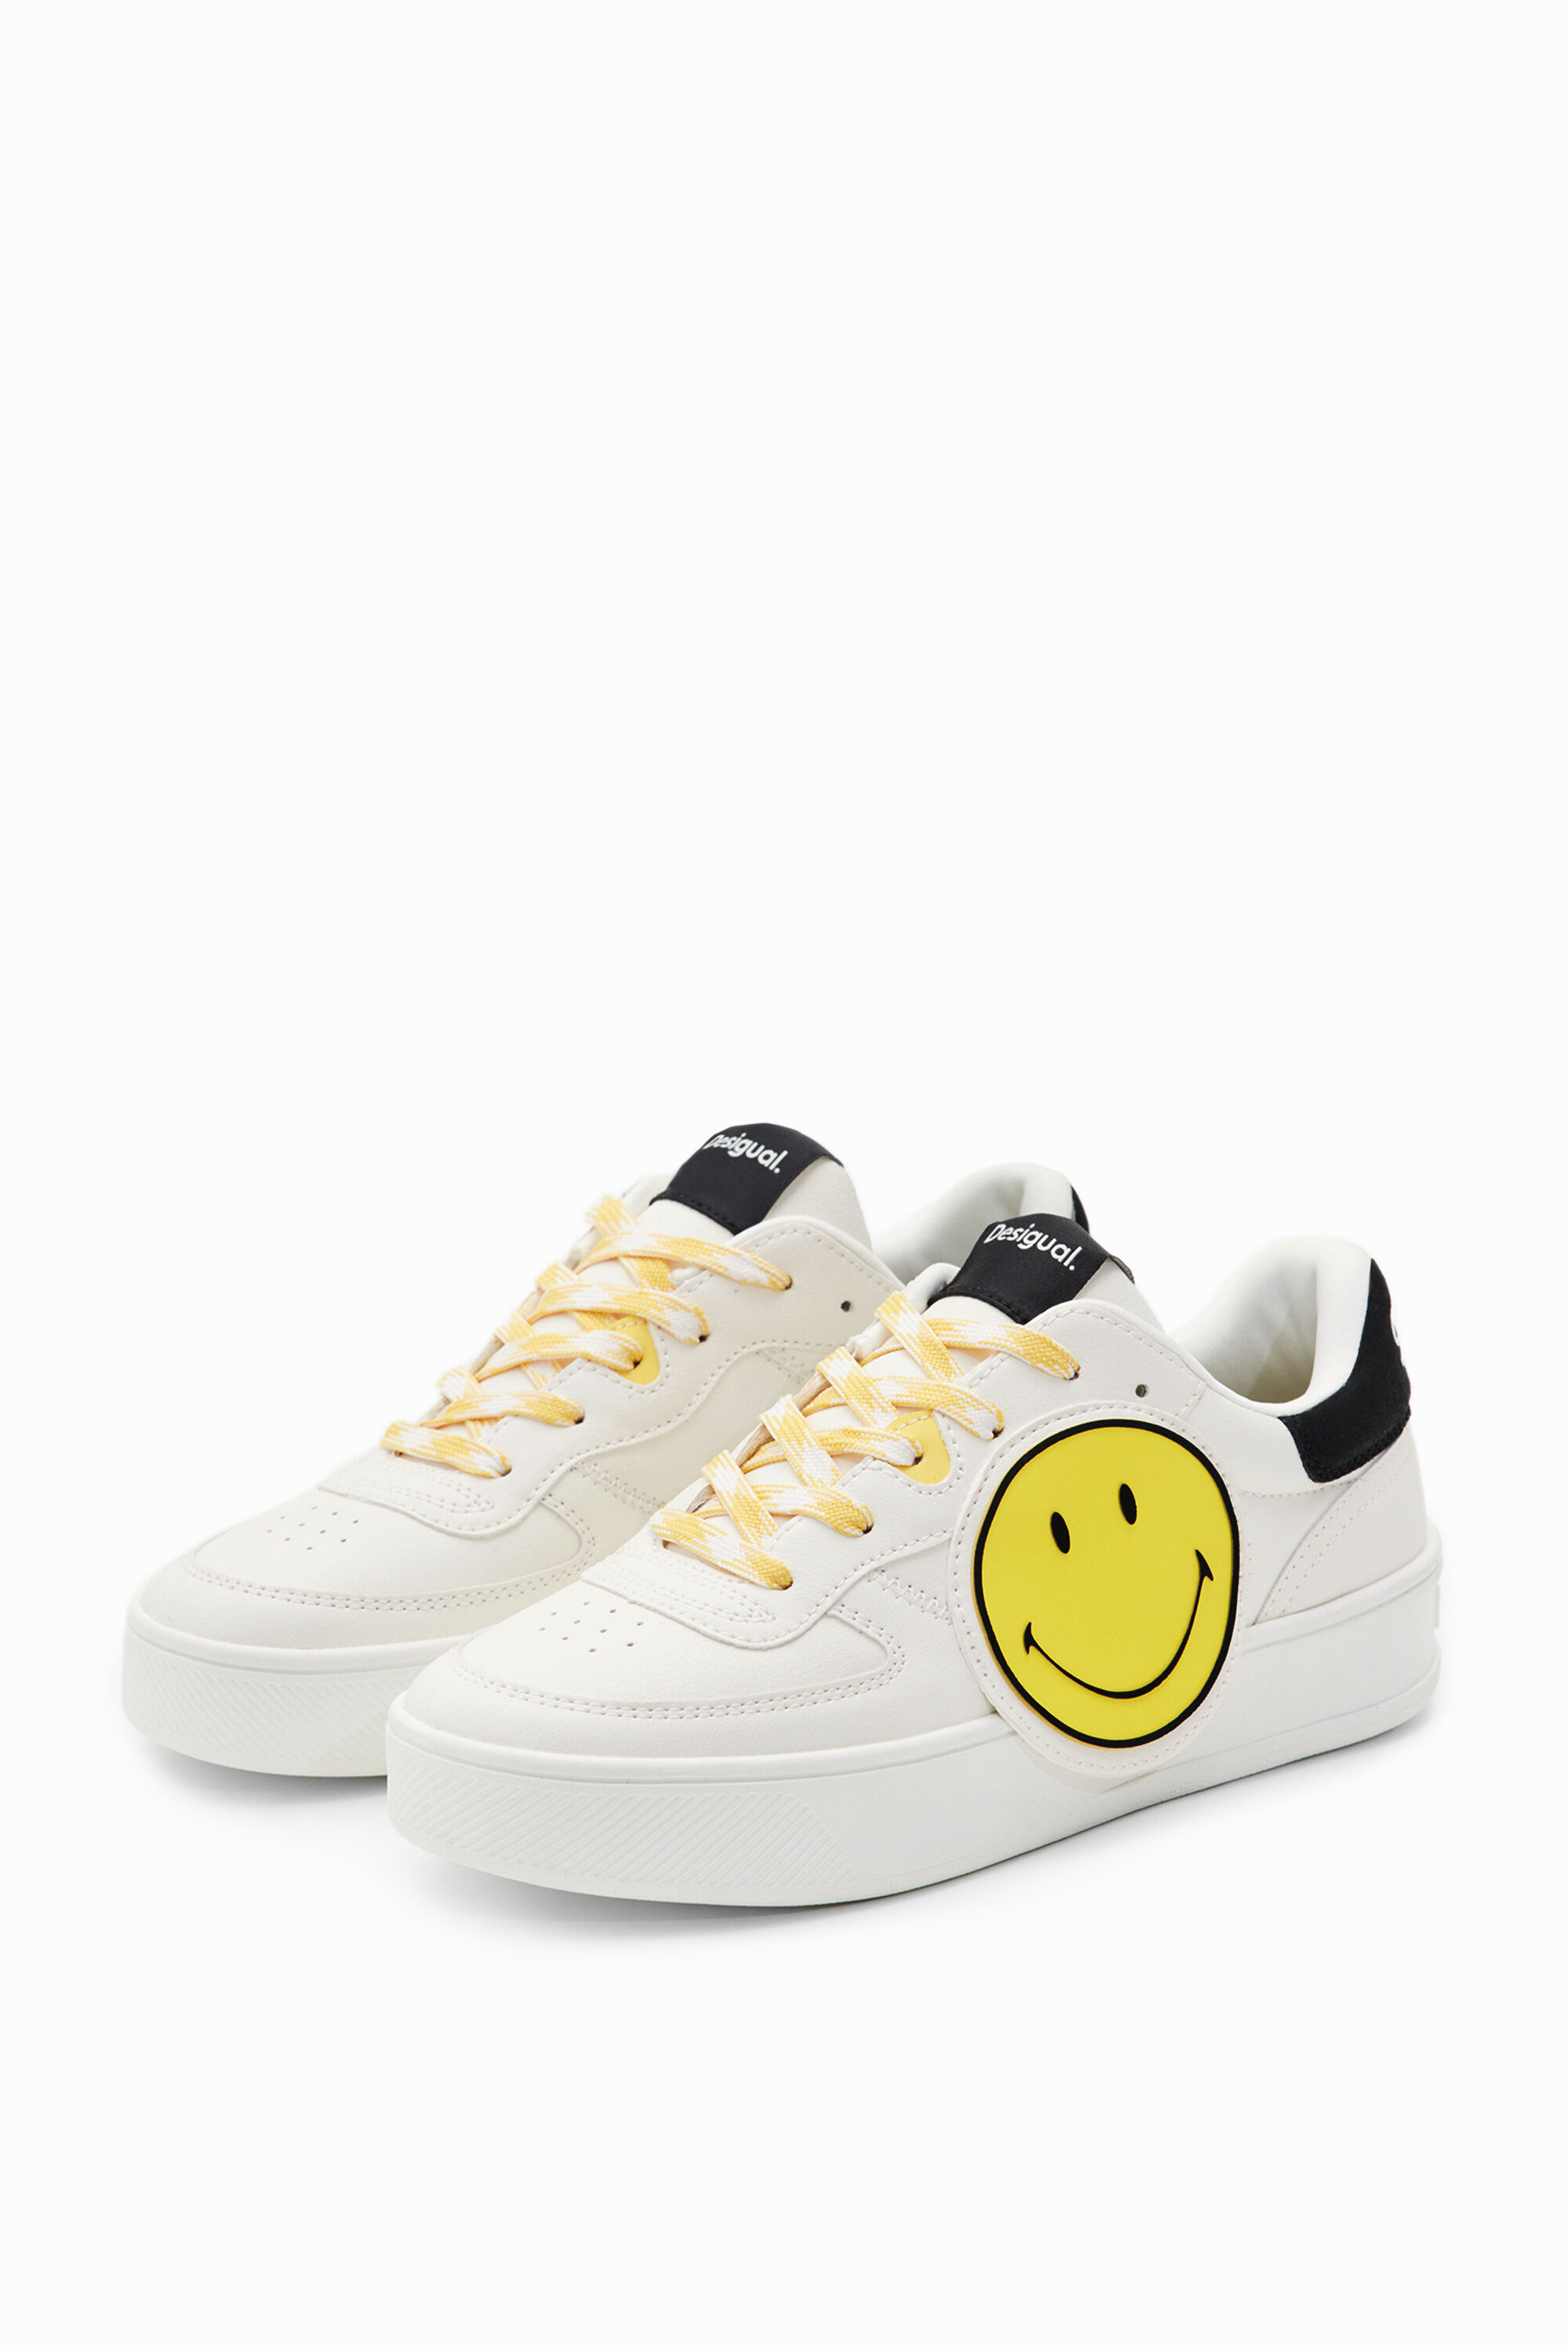 Desigual Smiley platform sneakers